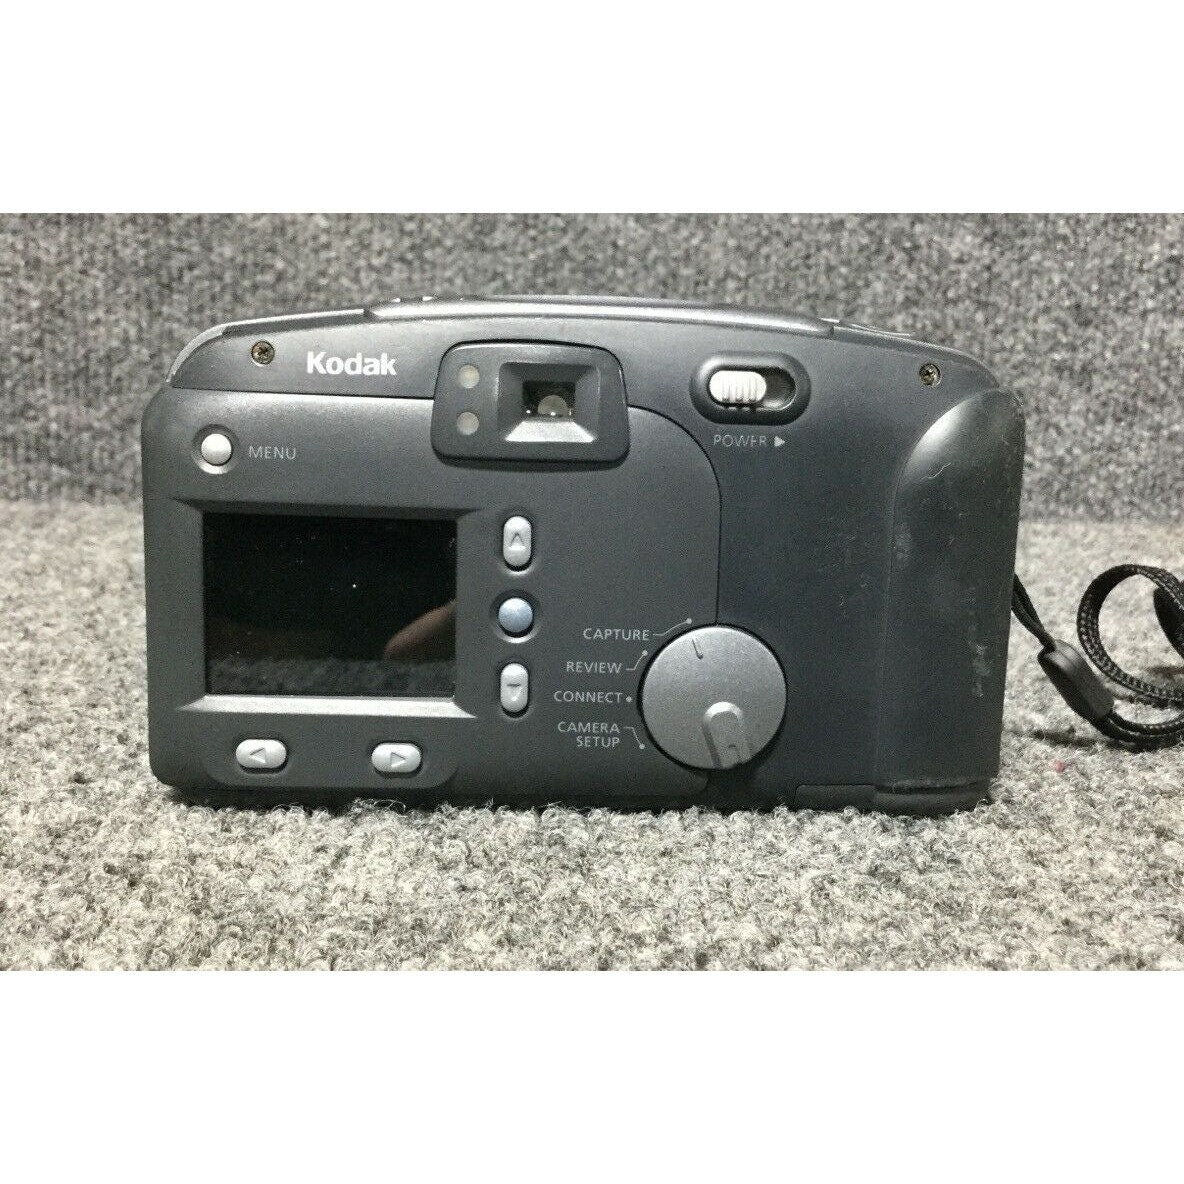 Kodak DC 280 2.0MP Digital Camera - Black Silver